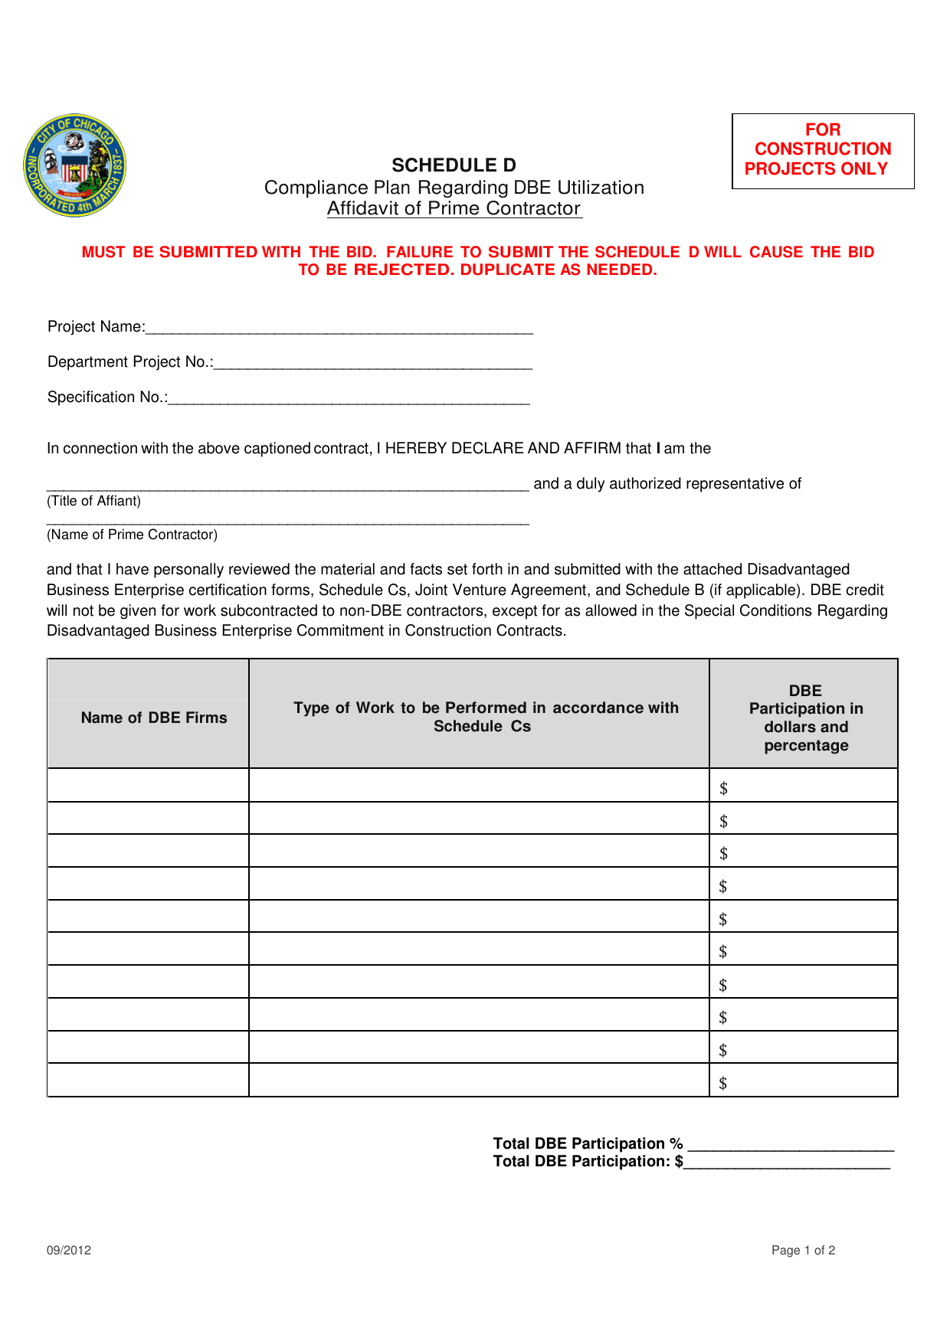 Schedule D Affidavit of Prime Contractor: Compliance Plan Regarding Dbe Utilization - City of Chicago, Illinois, Page 1